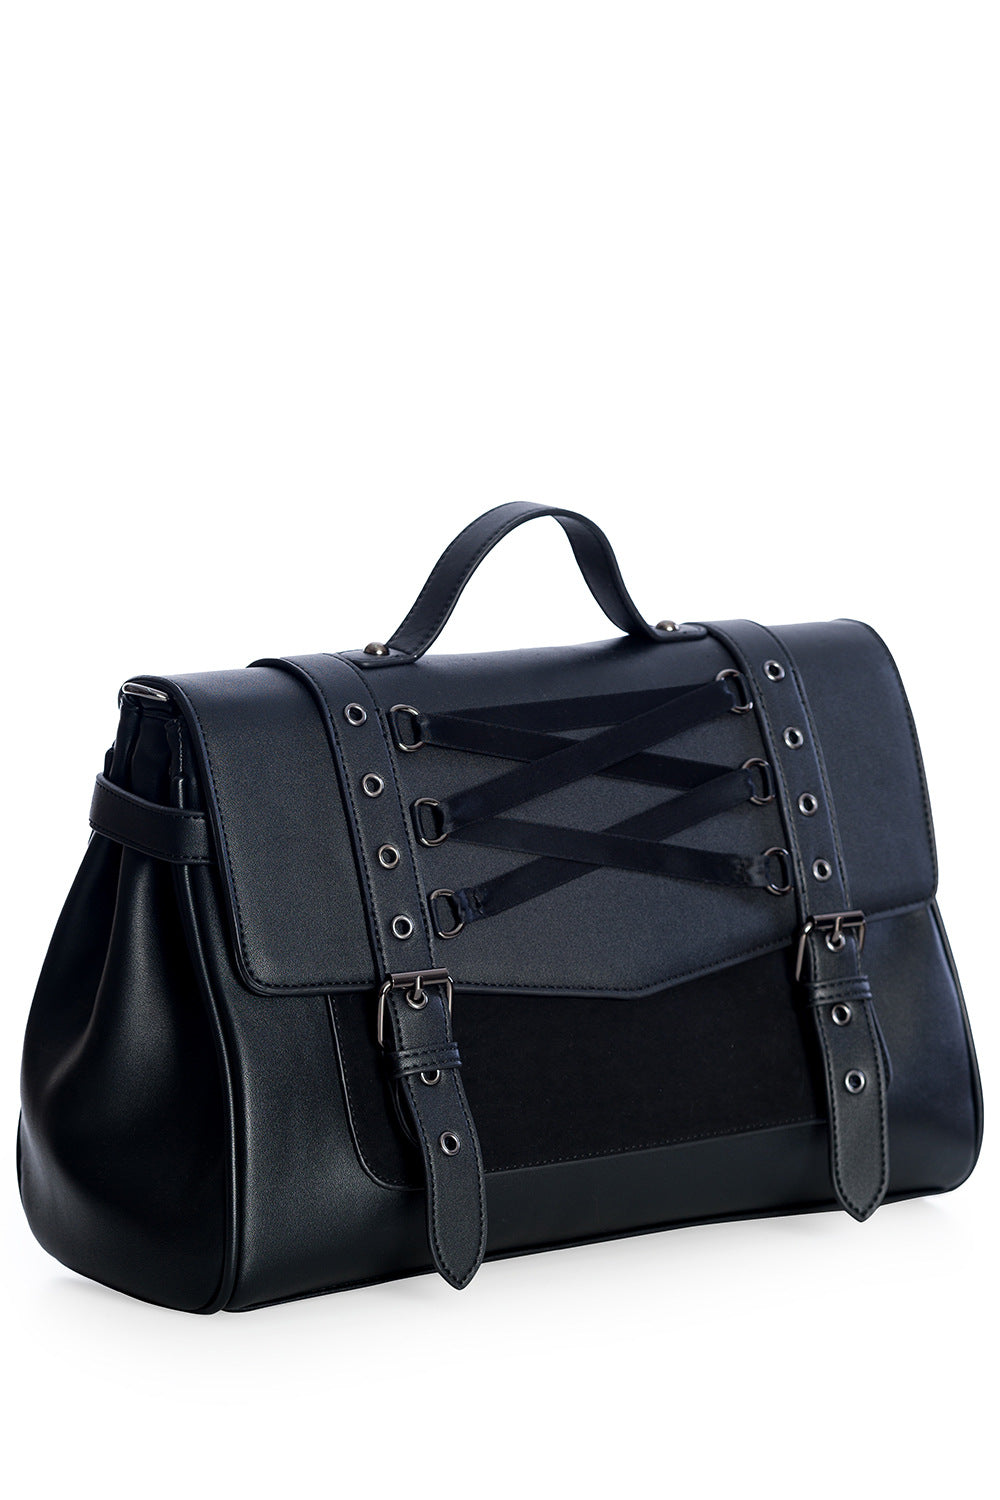 Banned Alternative Astaroth Corset Handbag